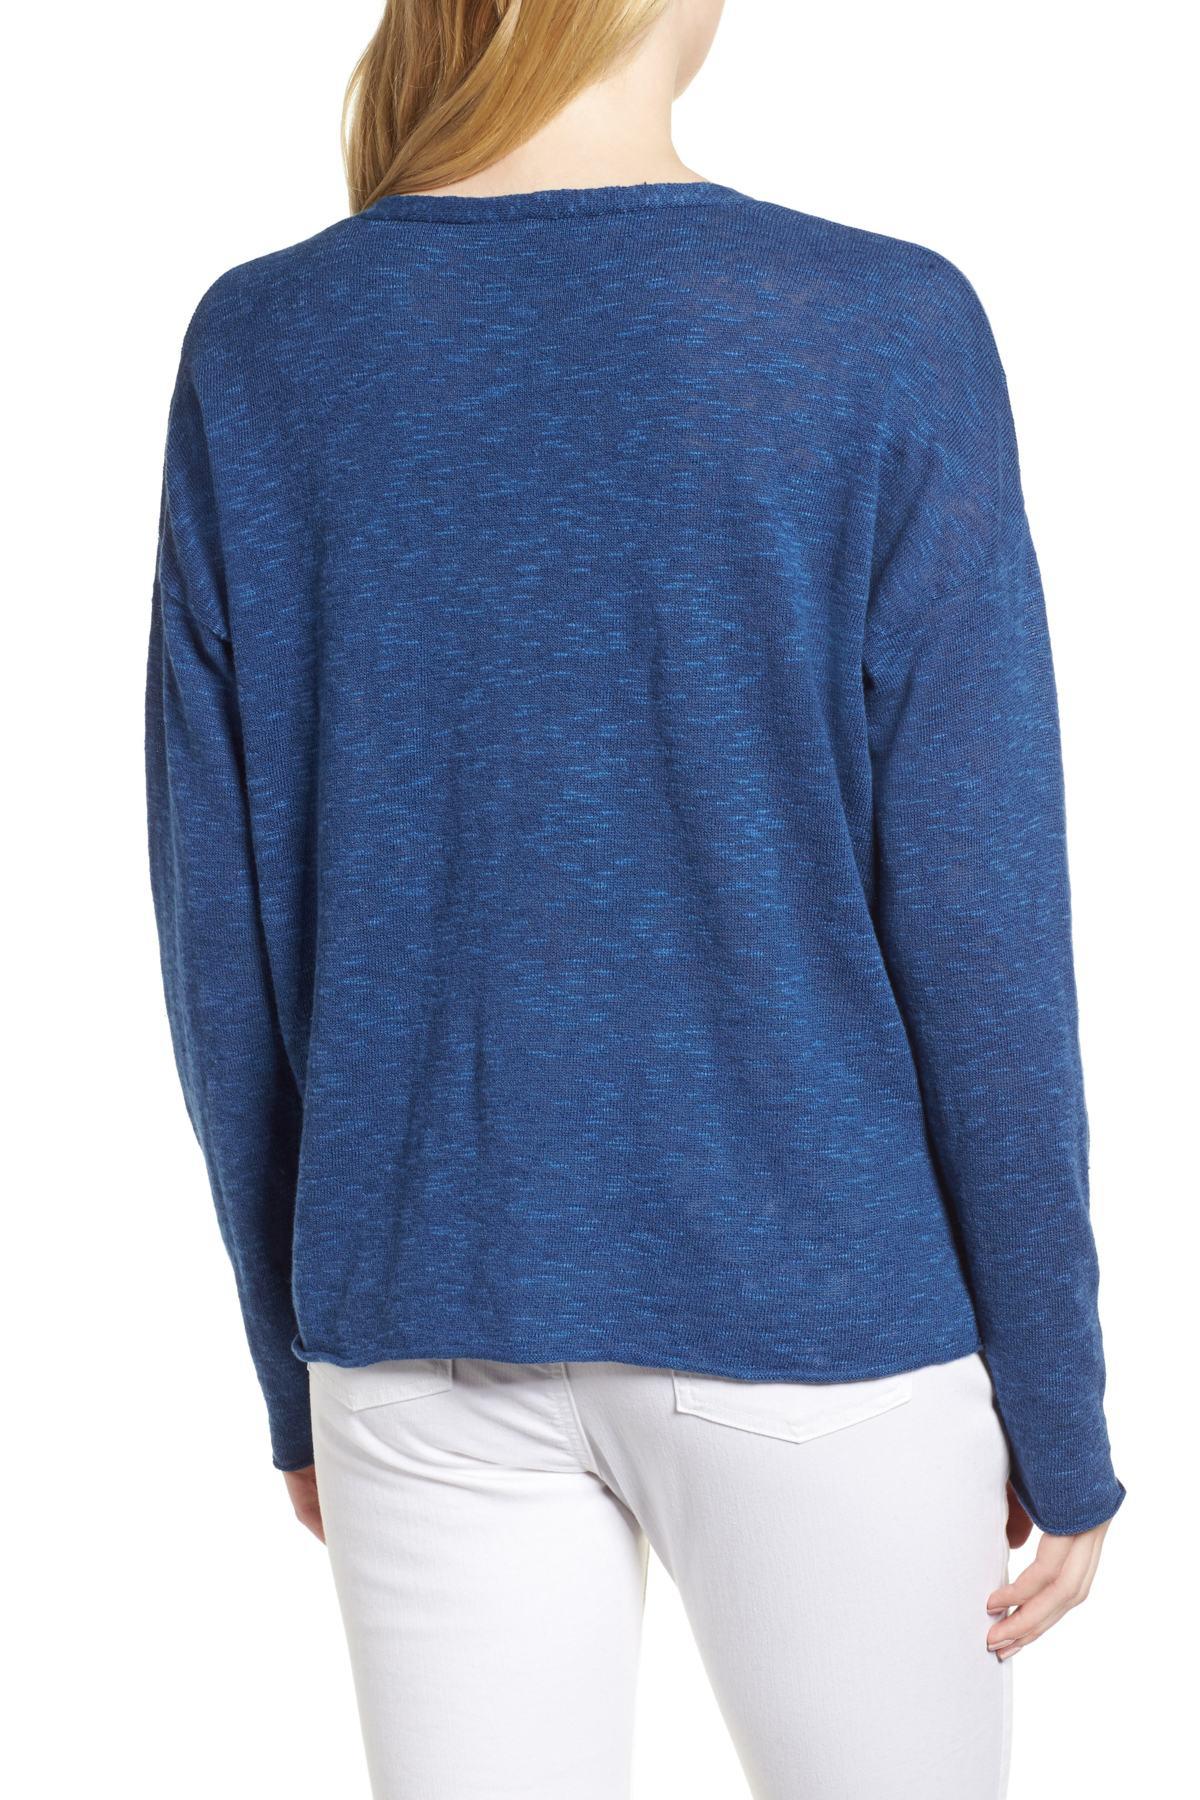 Lyst - Eileen Fisher Boxy Organic Linen & Cotton Sweater in Blue